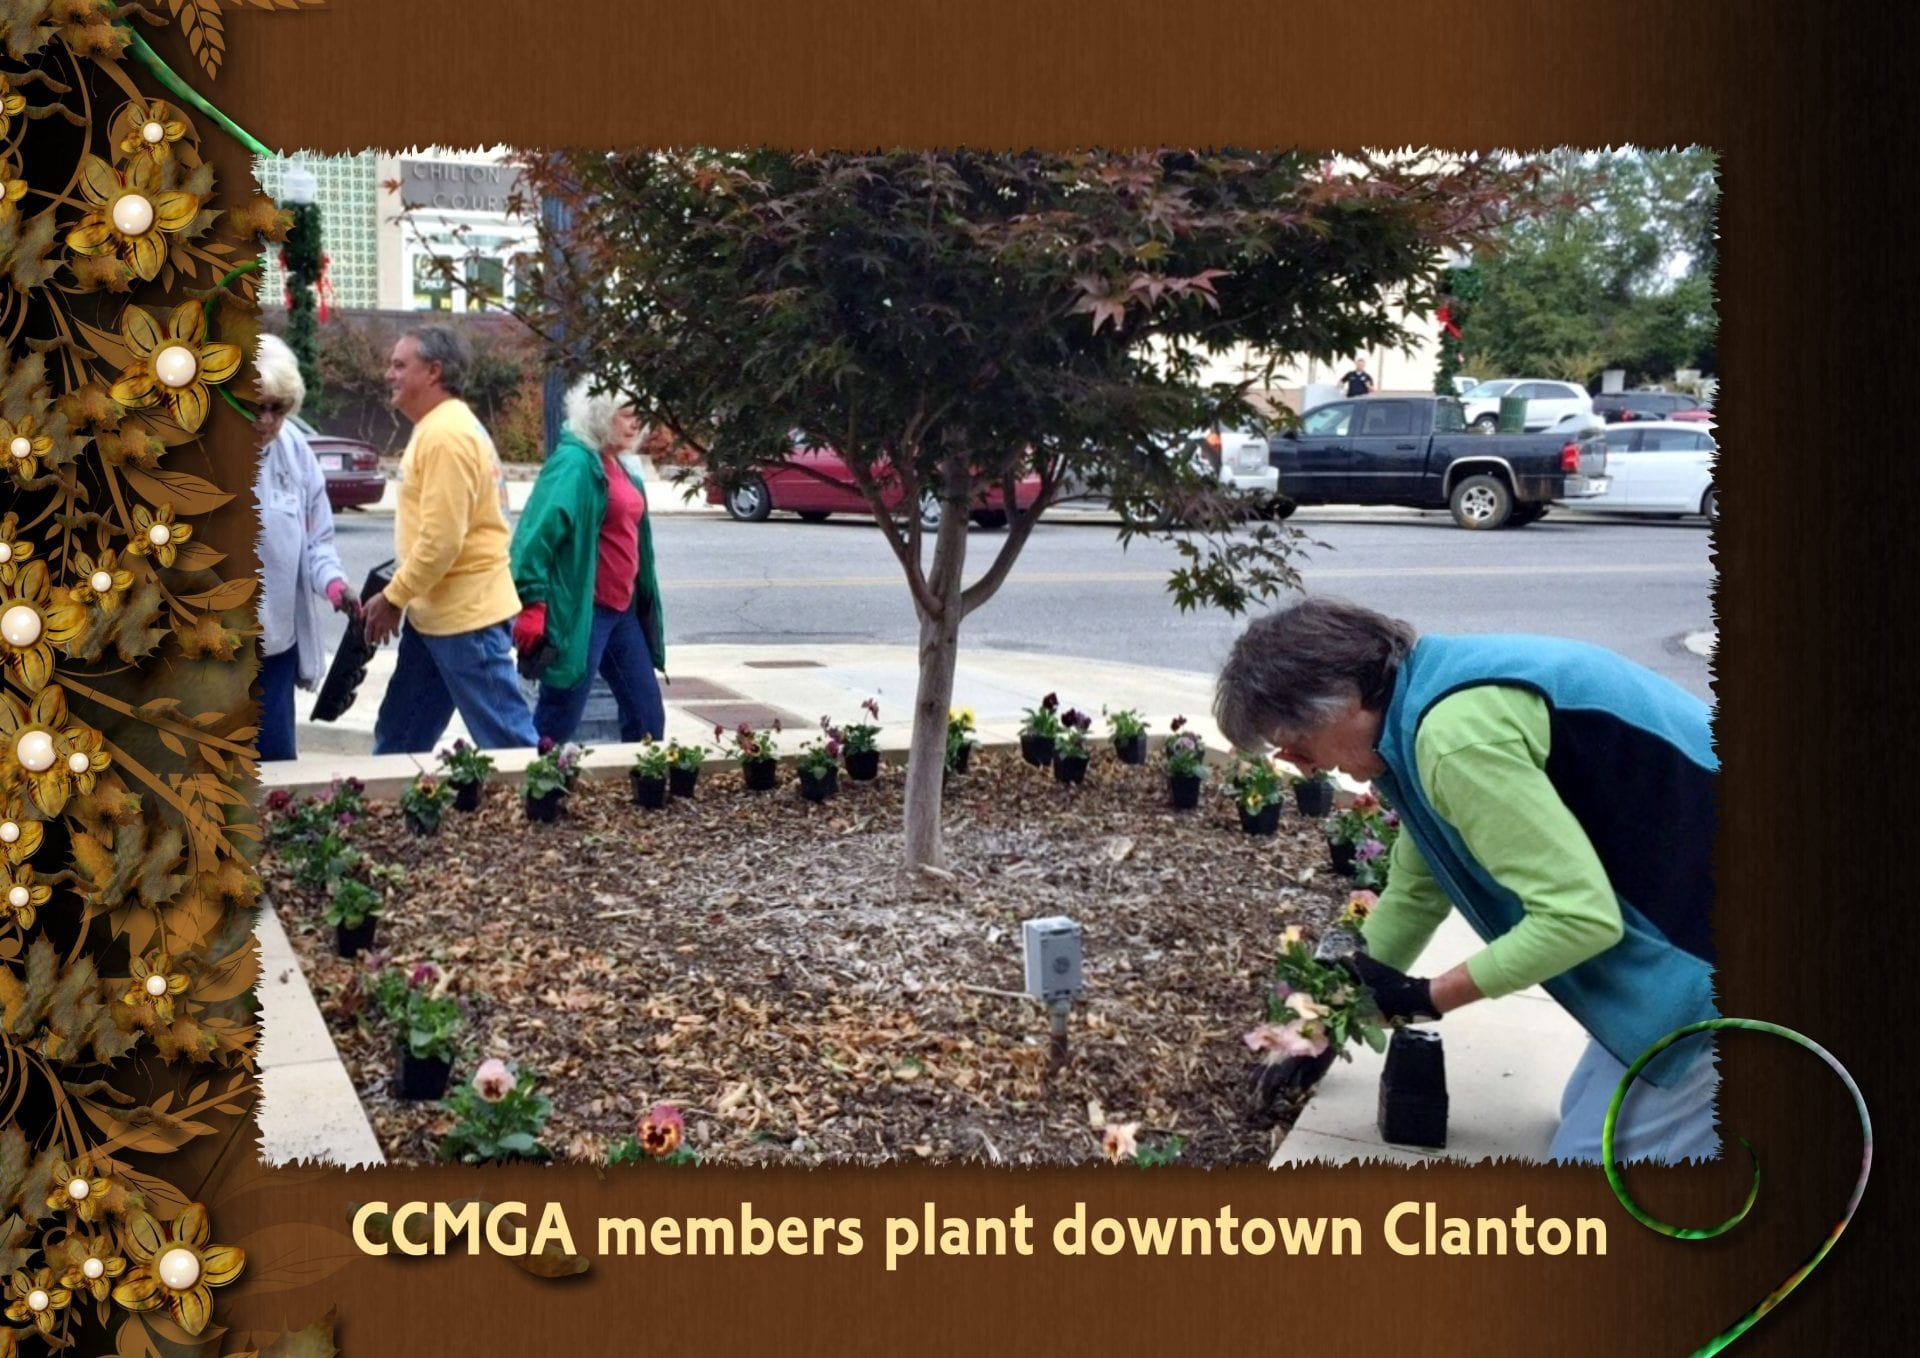 CCMGA members planting Clanton